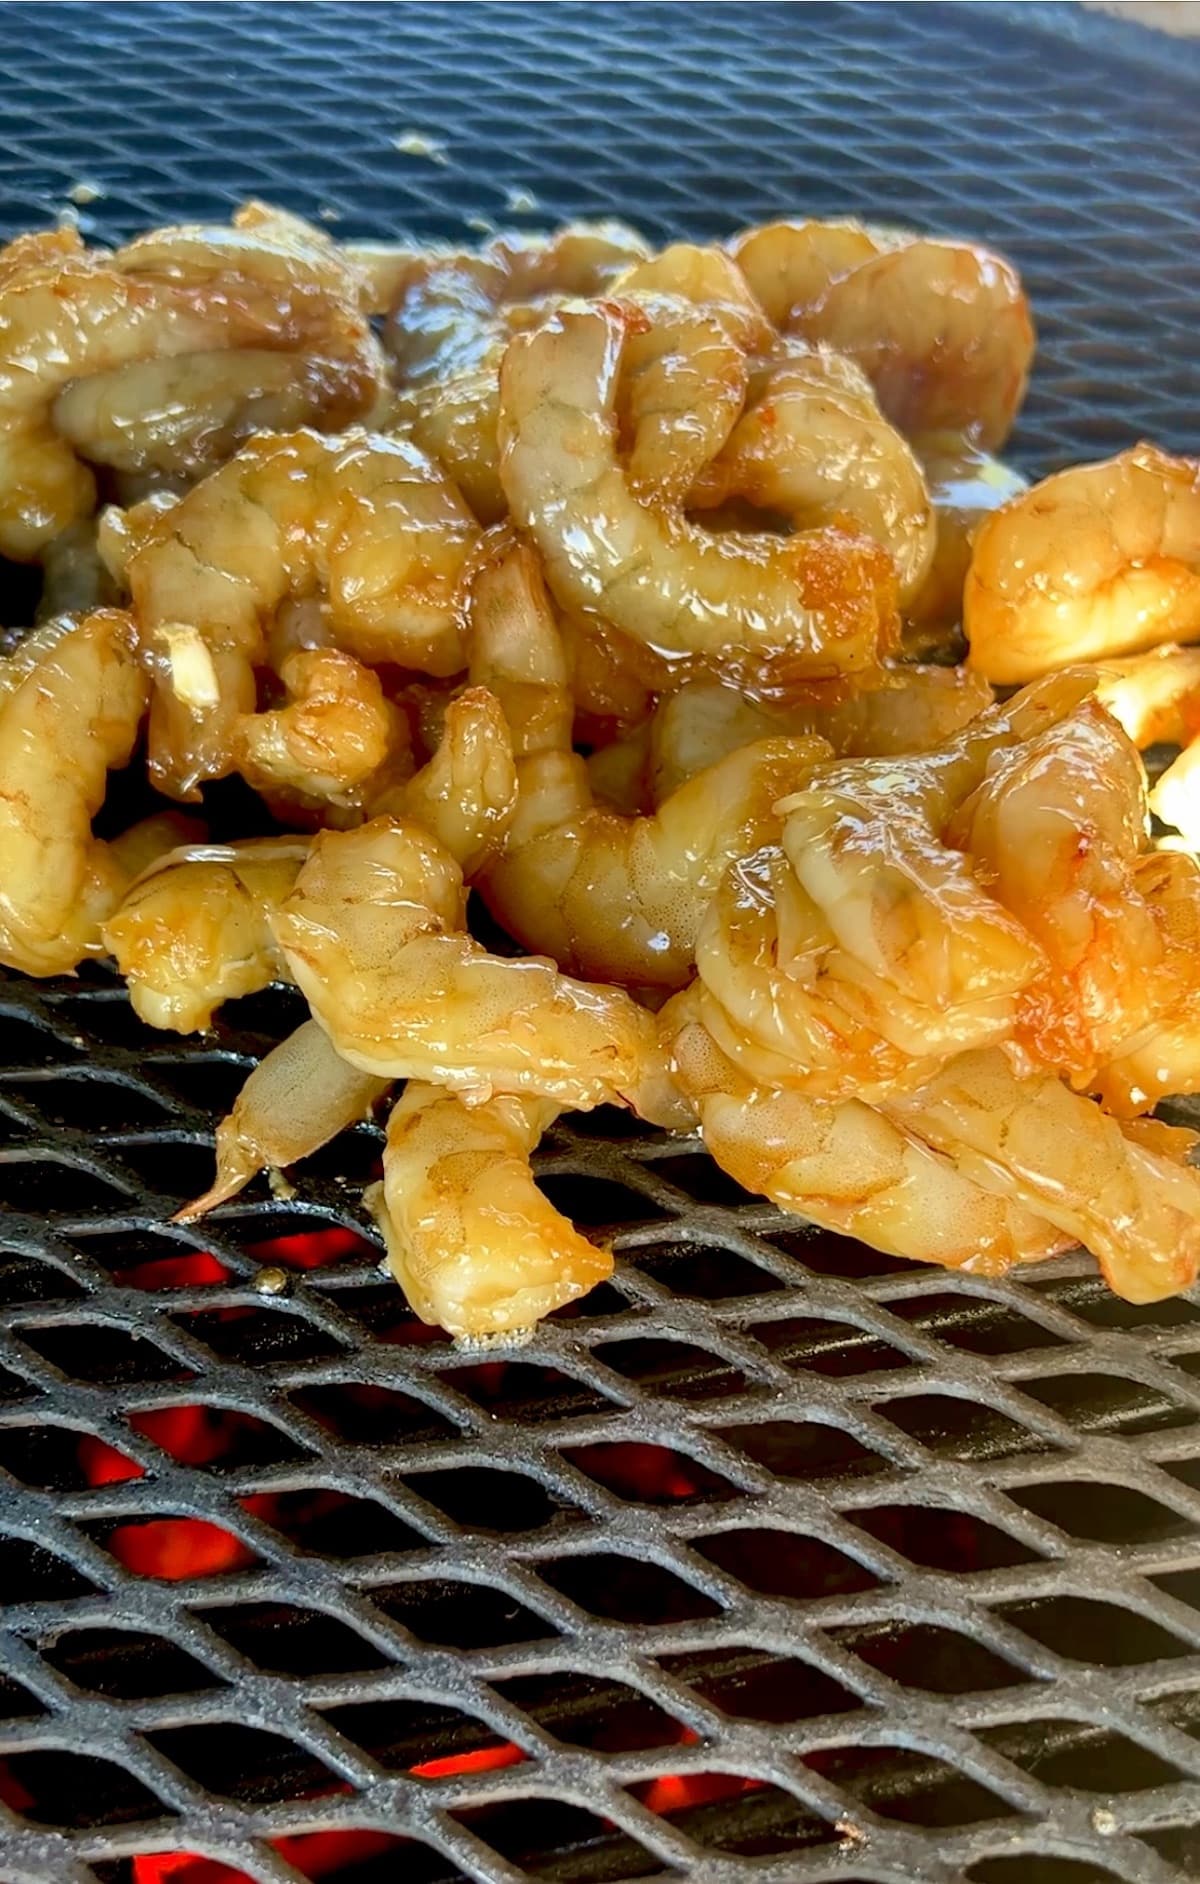 Shrimp on a grill.